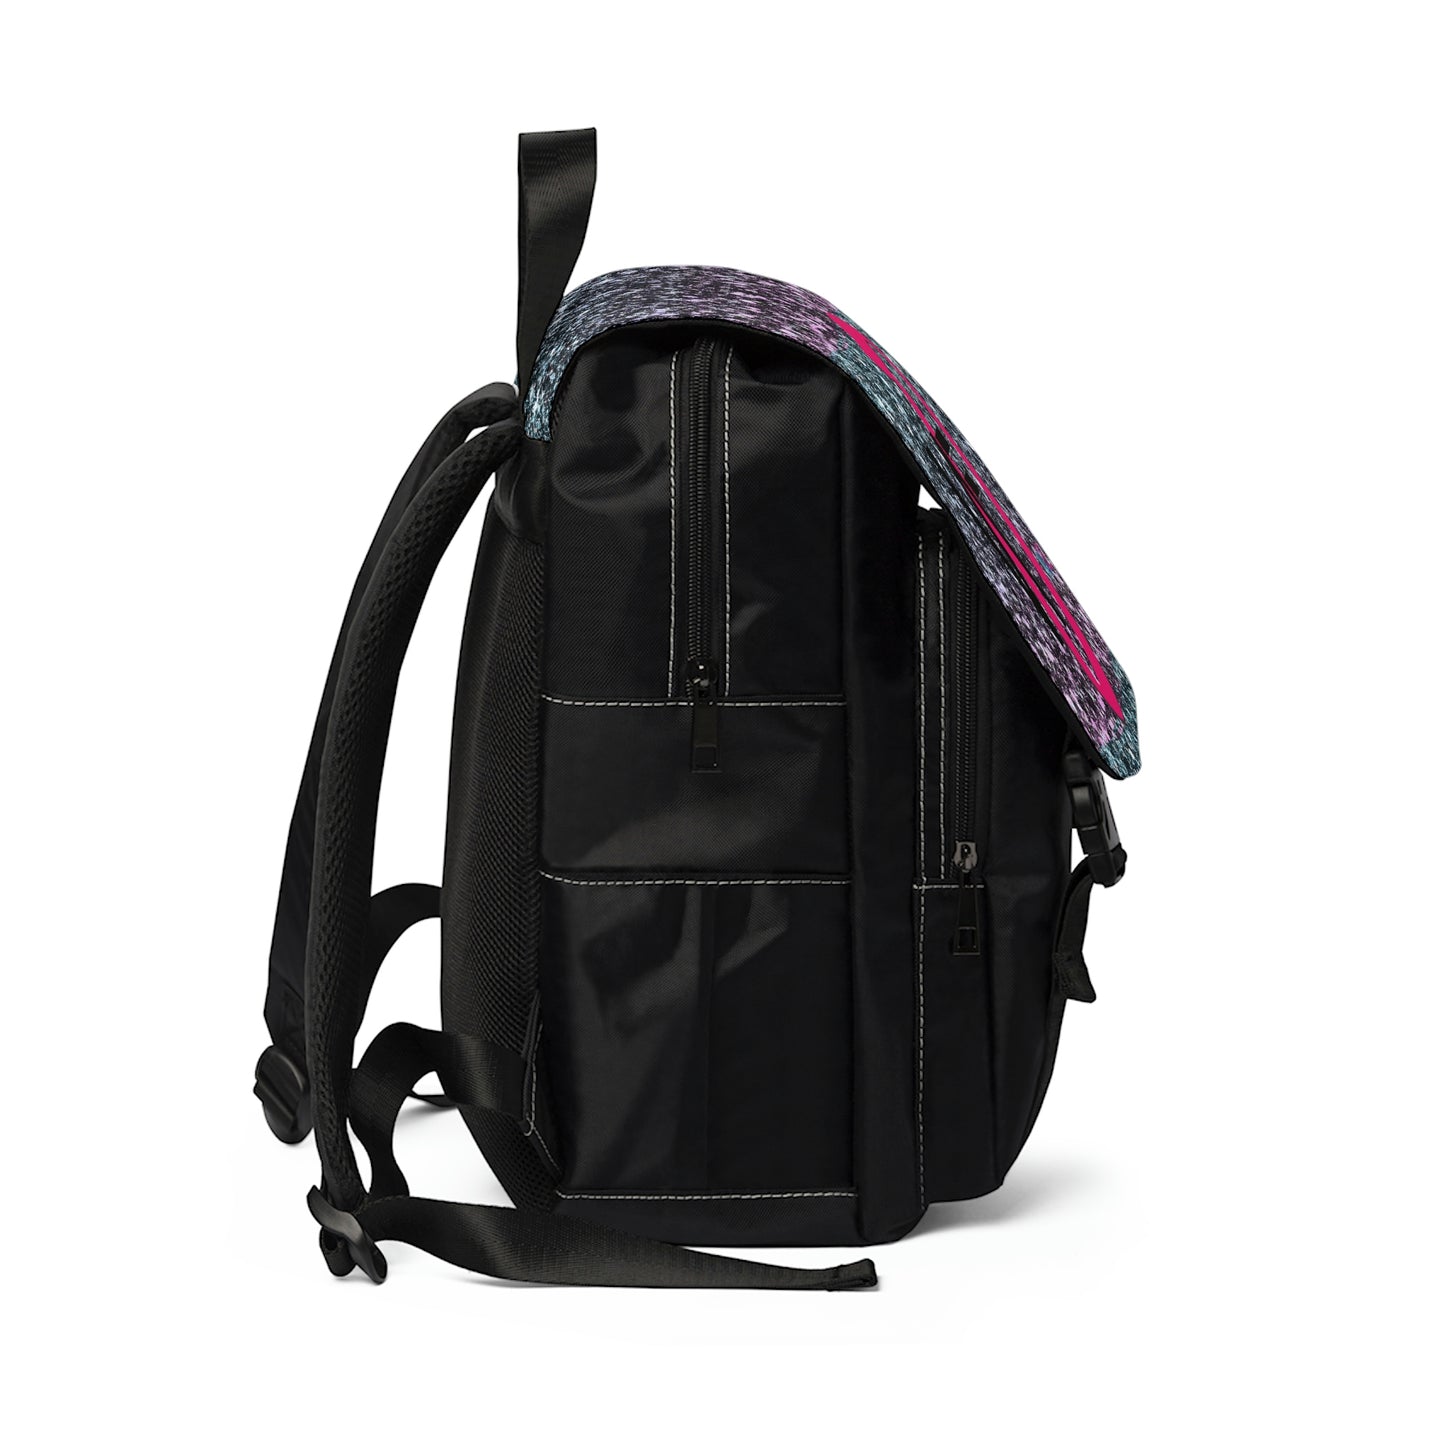 TeamStore Nfuse Casual Shoulder Backpack